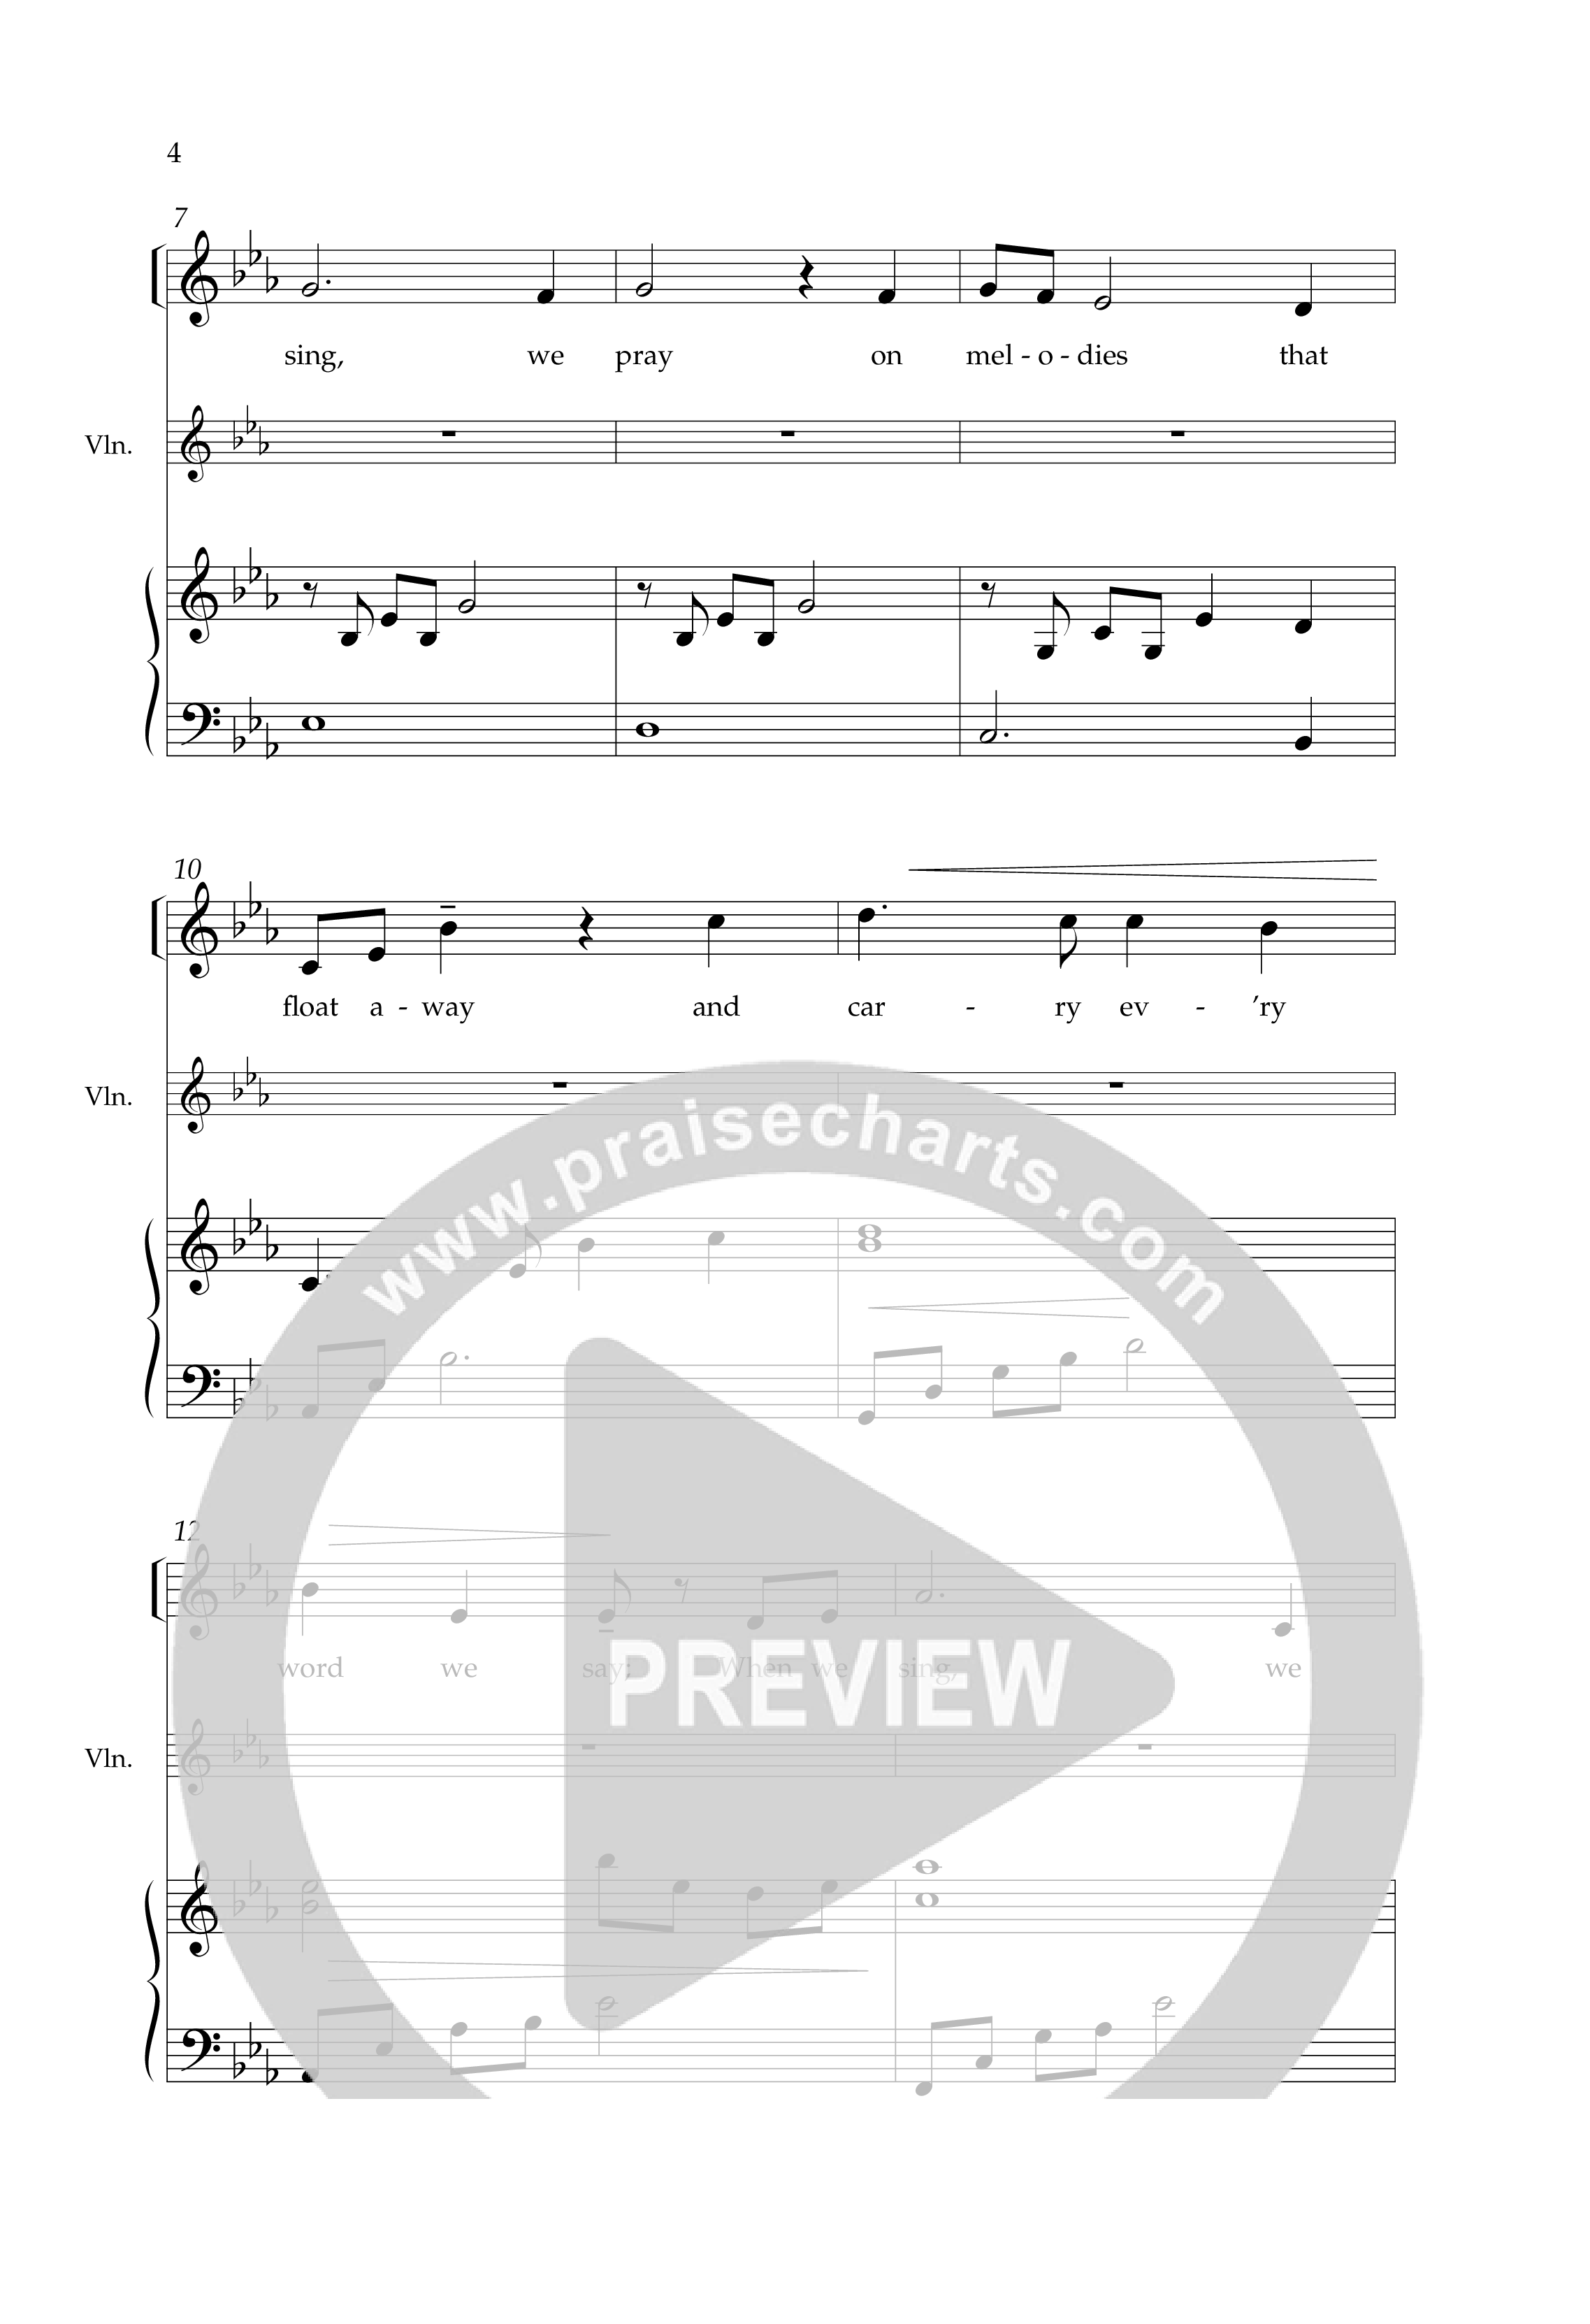 When We Sing We Pray (Choral Anthem SATB) Anthem (SATB/Piano) (Lifeway Choral / Arr. Phillip Keveren)